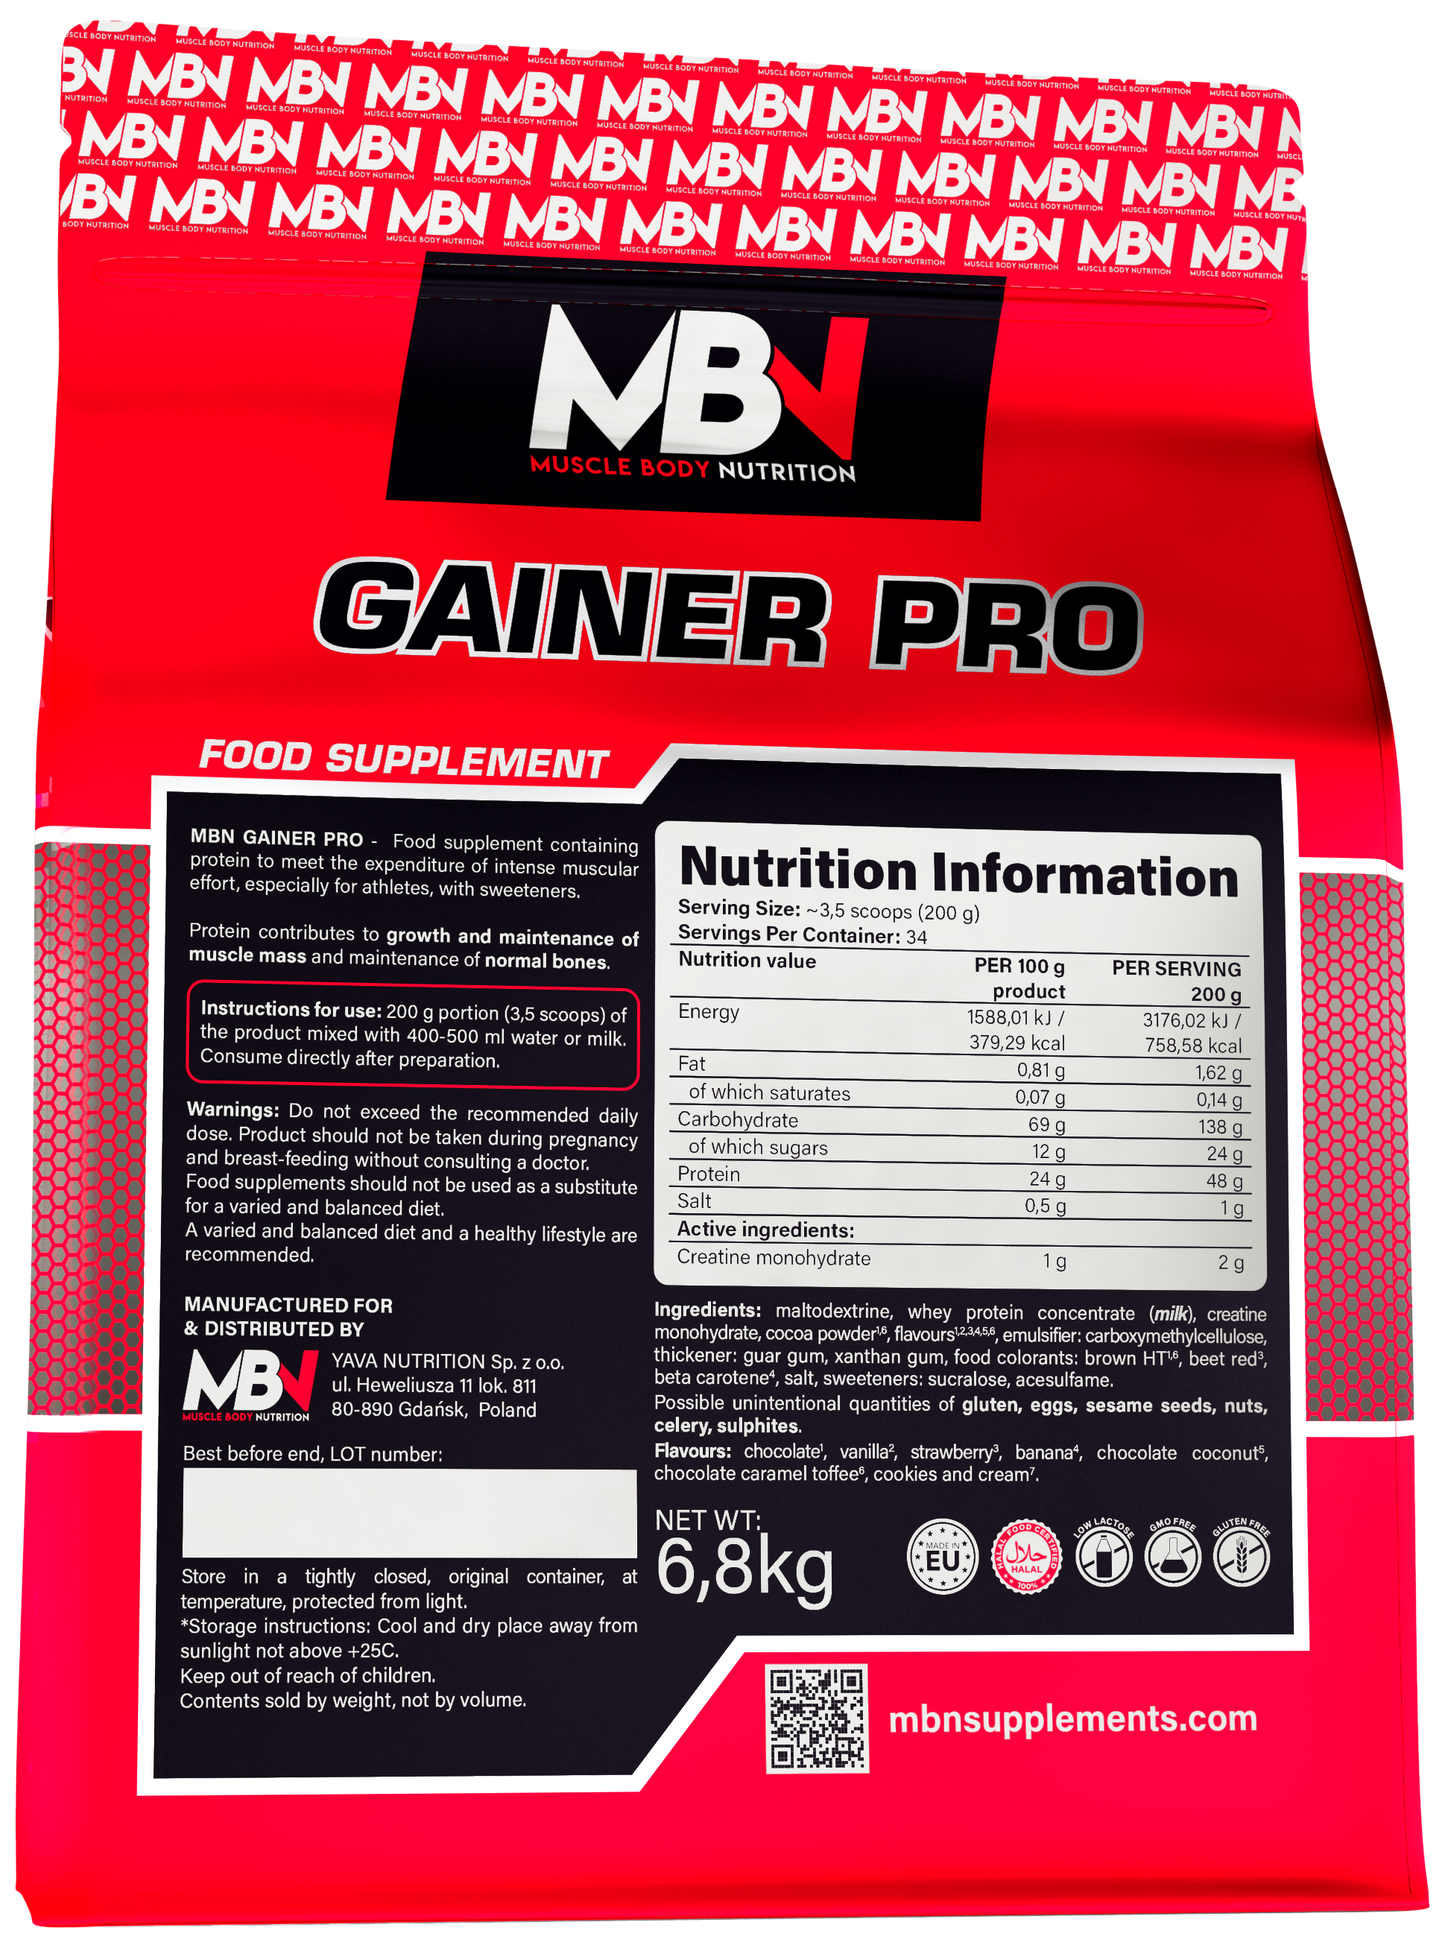 GAINER-PRO 6,8kg